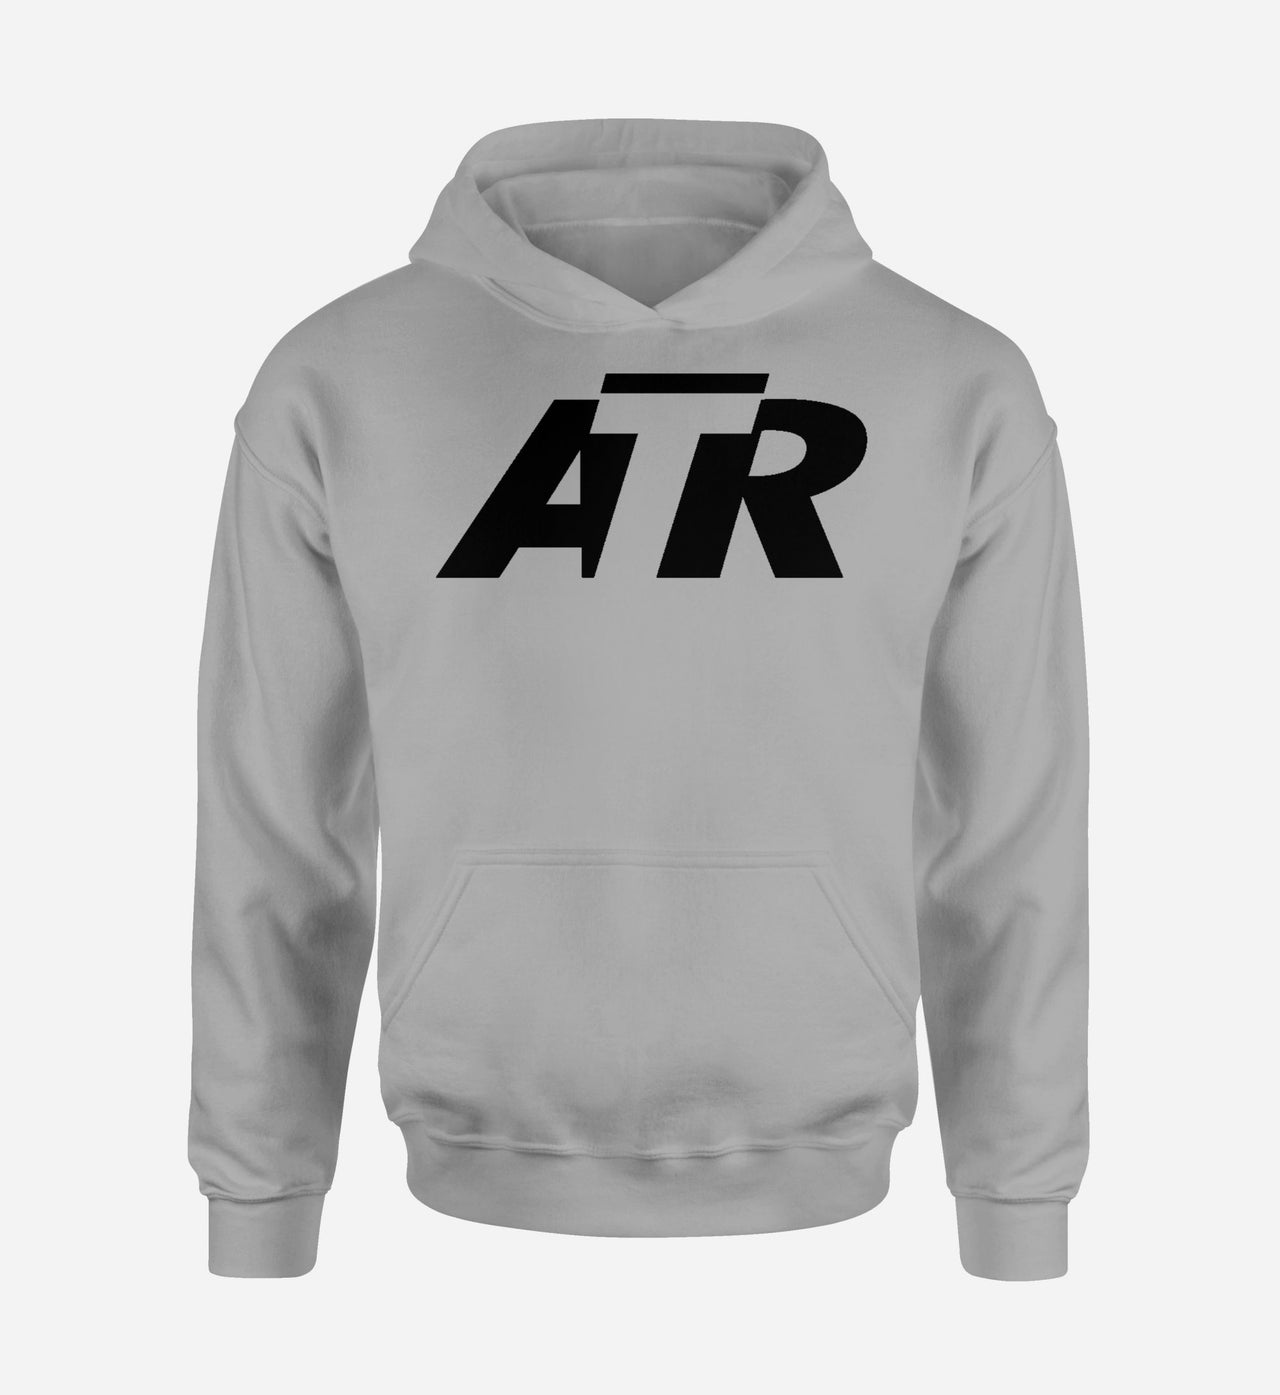 ATR & Text Designed Hoodies